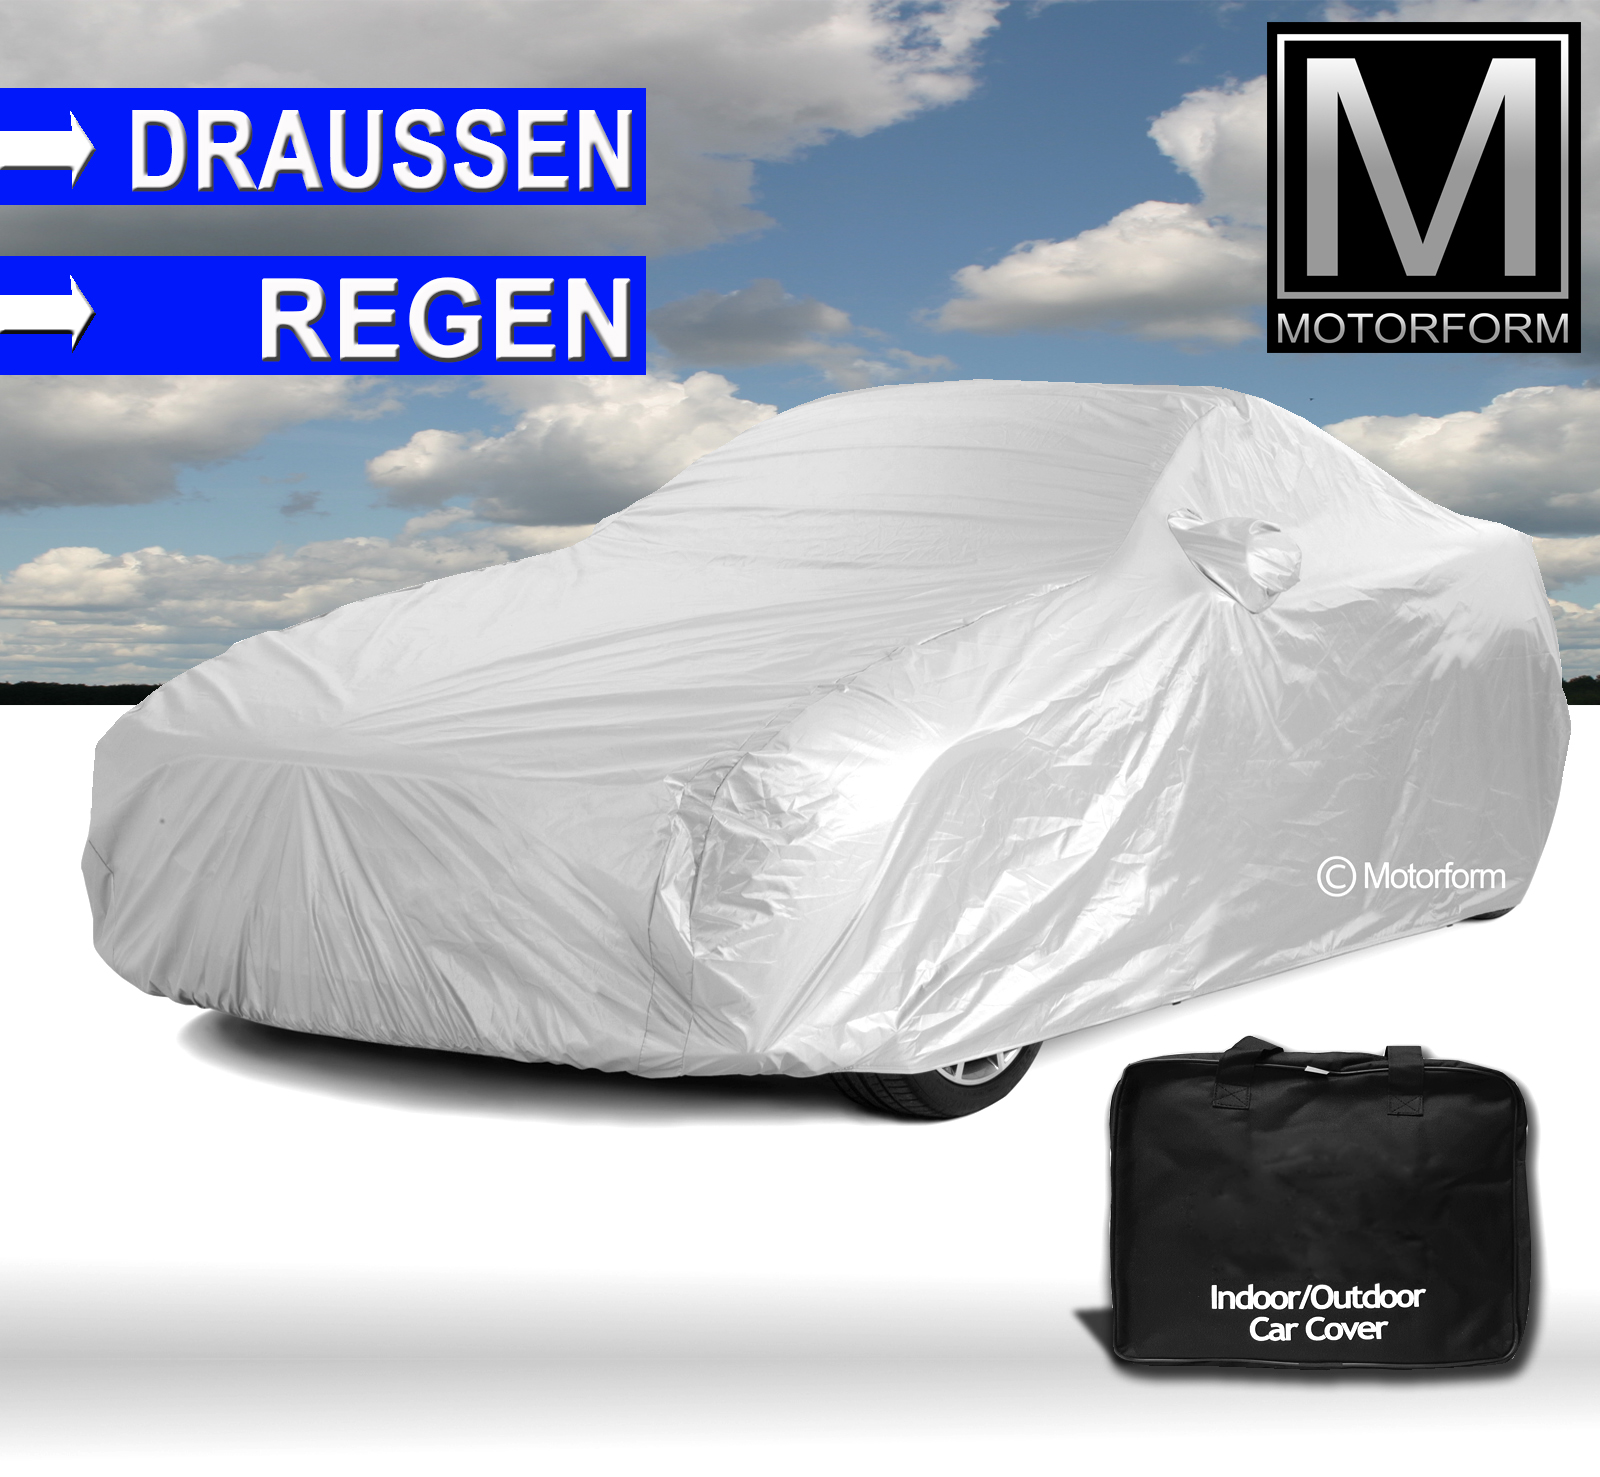 Voyager Outdoor Car Cover for Audi TT / TTS / TT RS TT Coupe 8N 